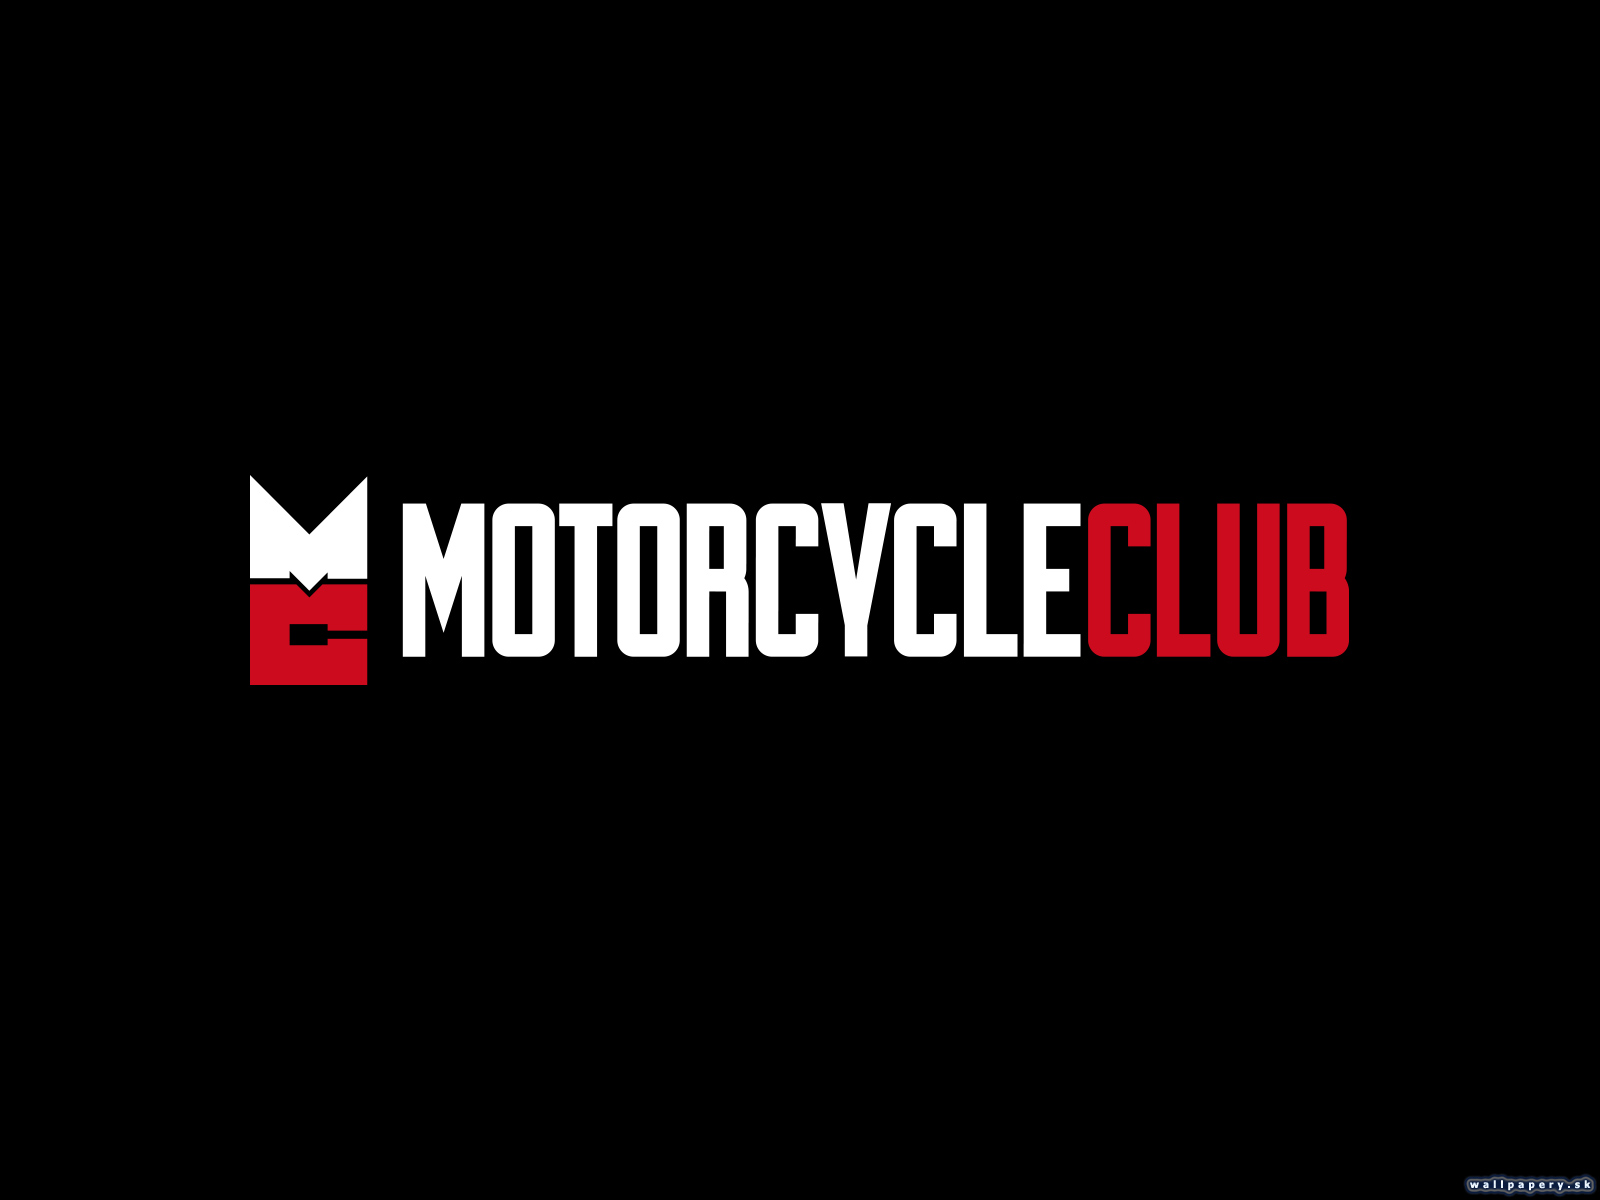 Motorcycle Club - wallpaper 2